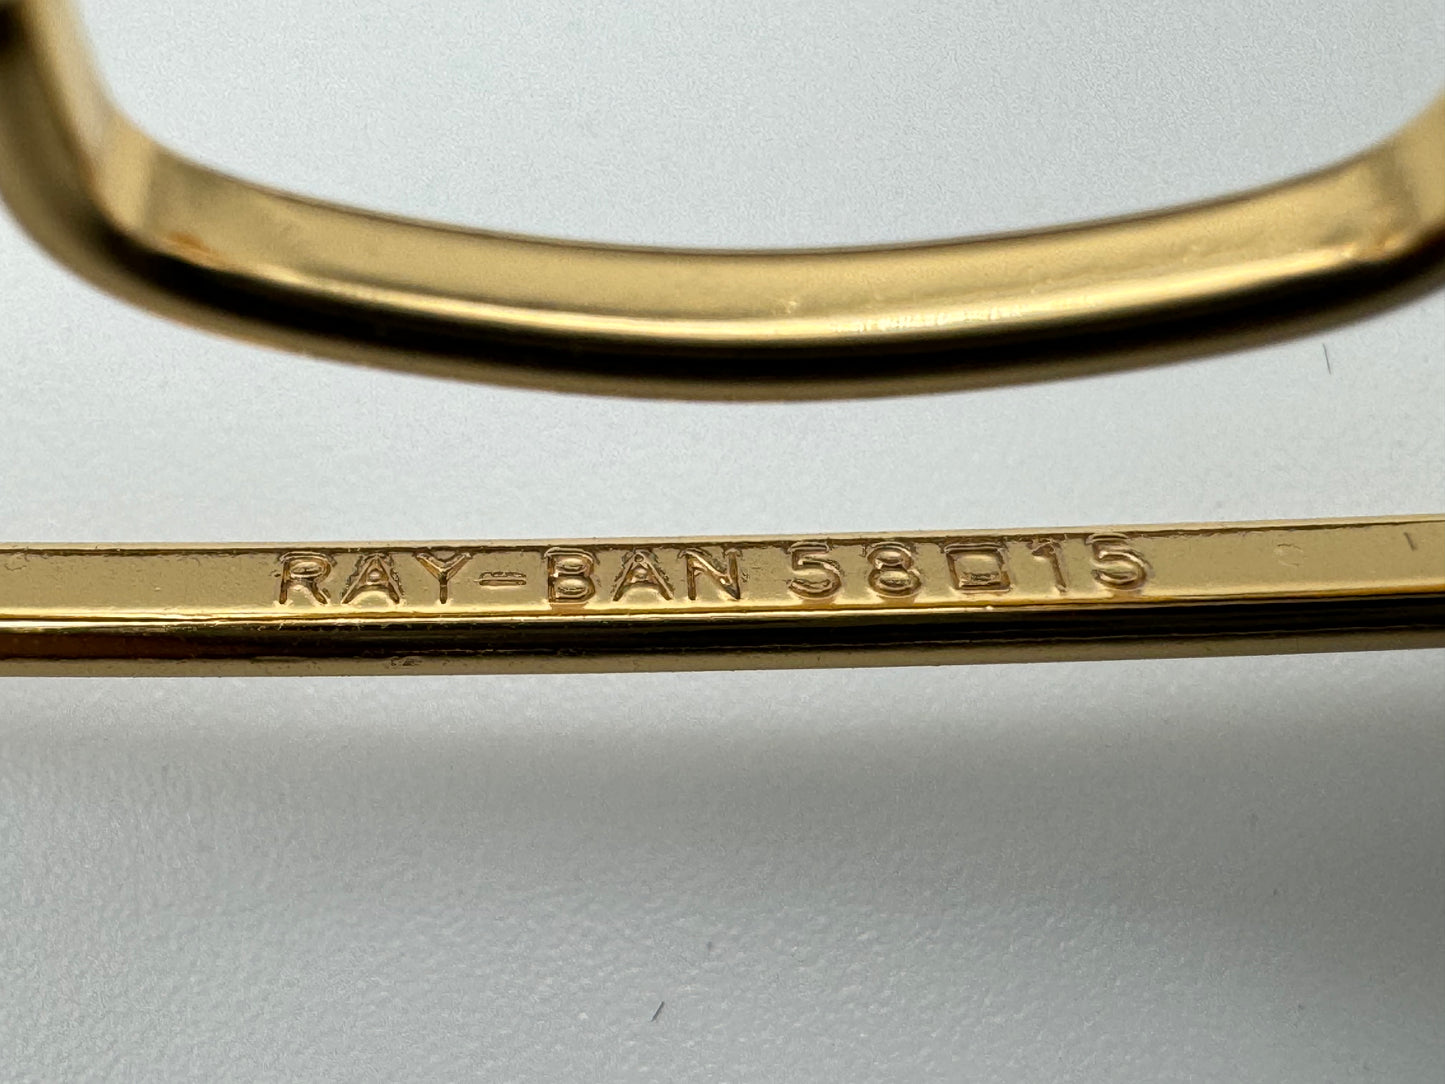 Ray-Ban Caravan 181 / 71 58mm Gold / Gray Gradient